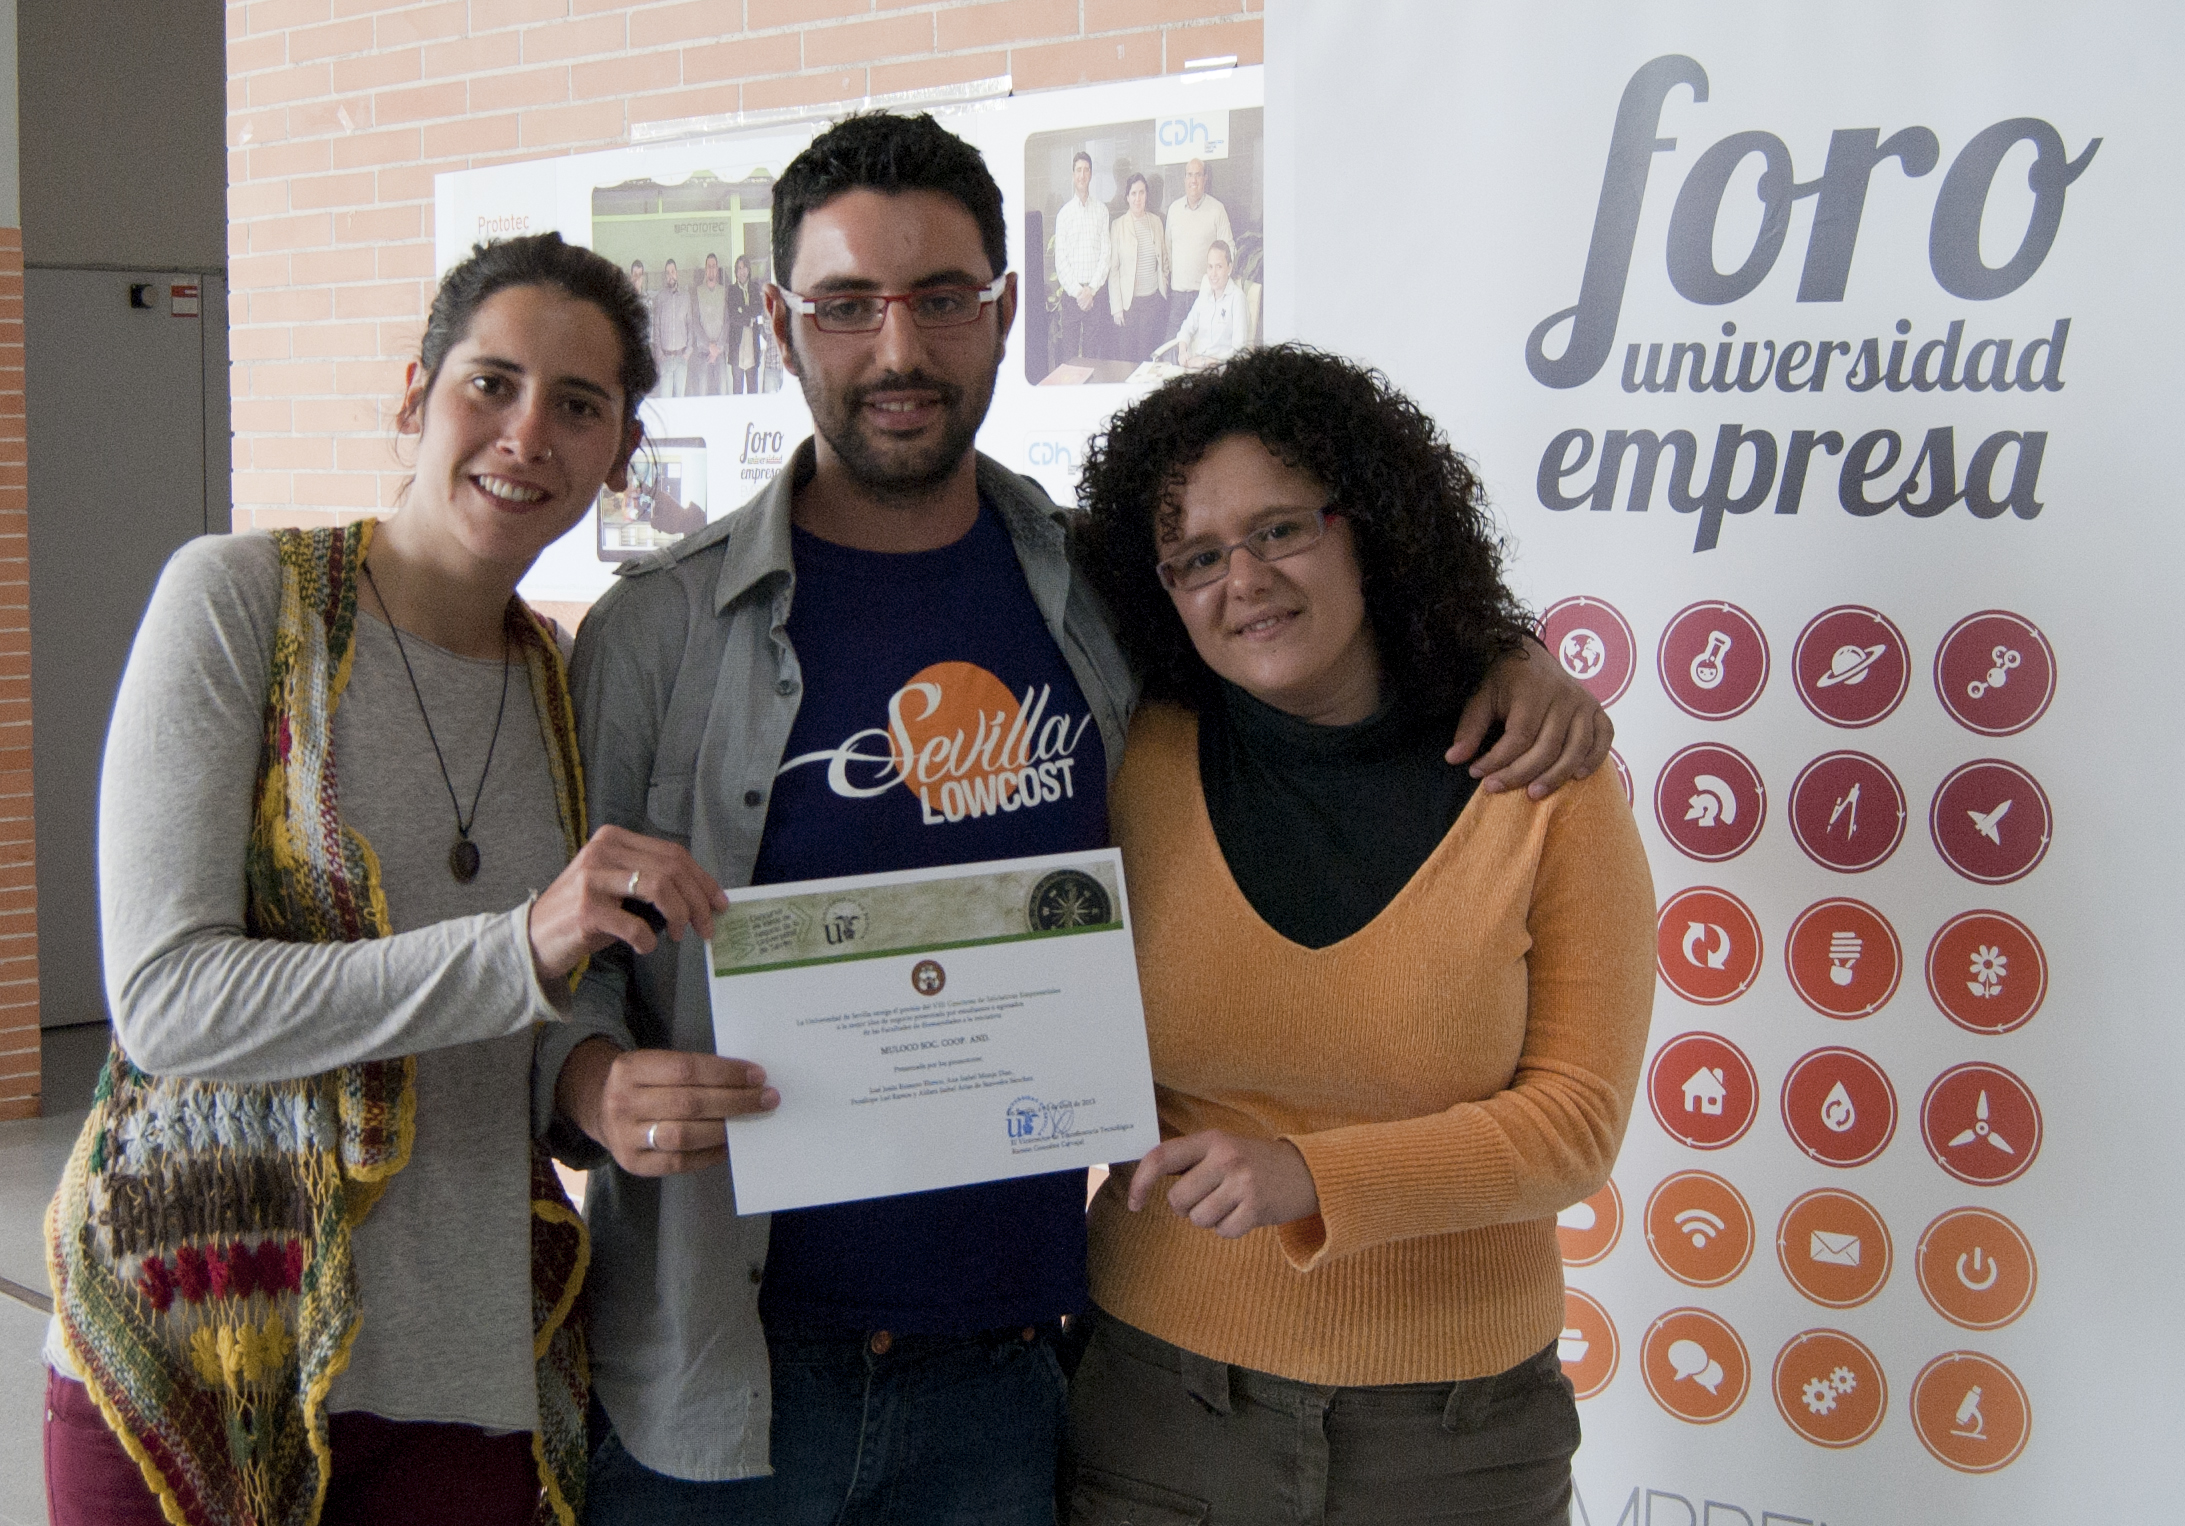 La Universidad premia a Sevilla LowCost